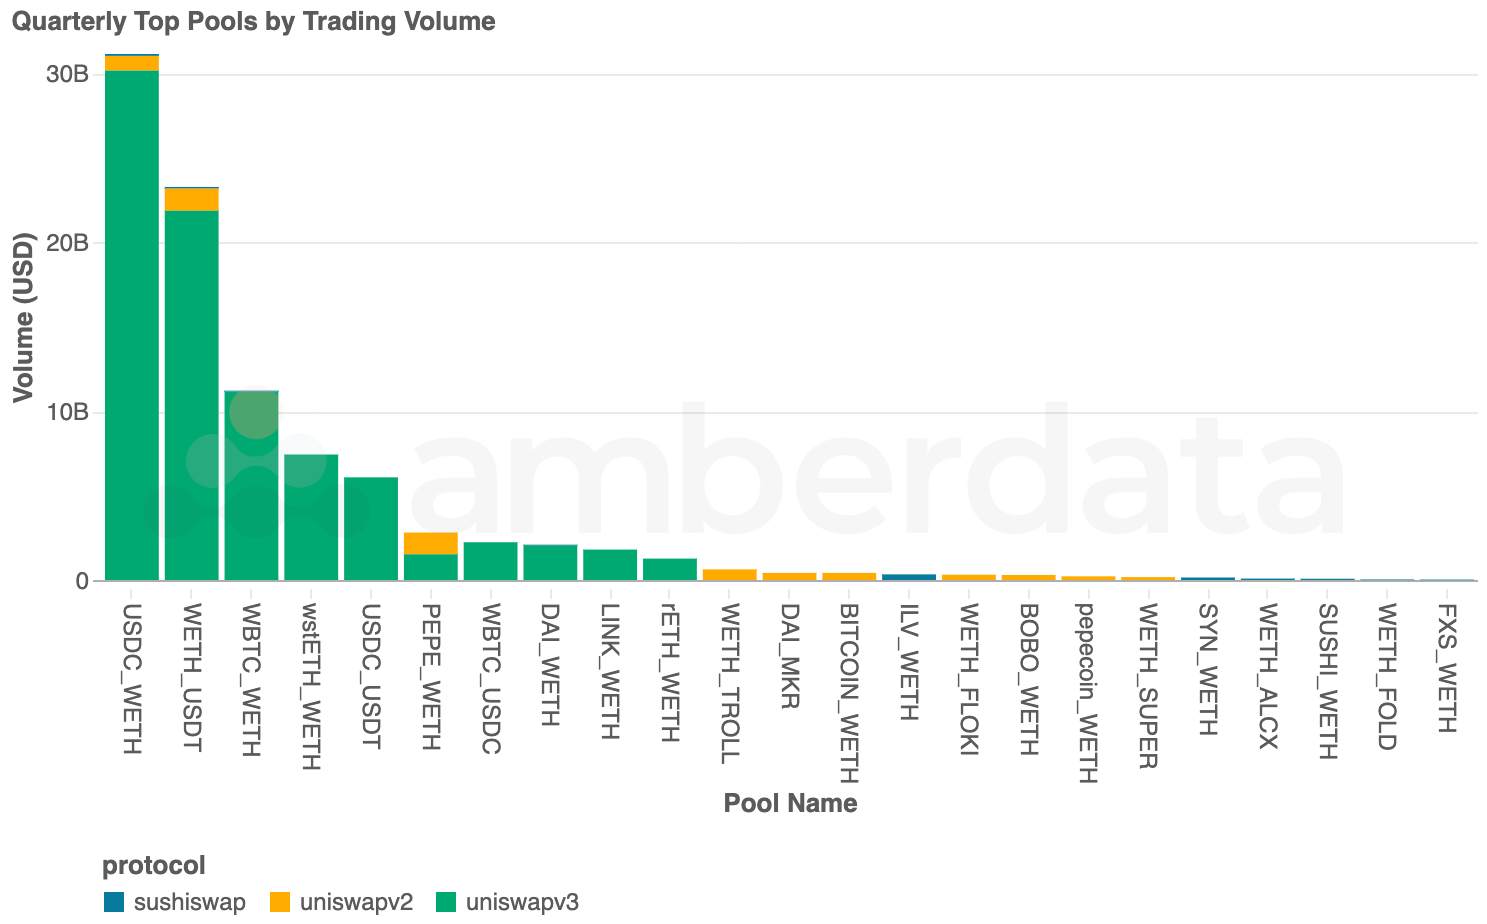 Amberdata API DeFi Lending borrow and lend volumes over the last 30 days. Quarterly top pools by trading volume. USDC, WETH, USDT, wstETH, PEPE, WBTC, DAI, and LINK. Uniswap v2, Uniswap v3, and Sushiswap